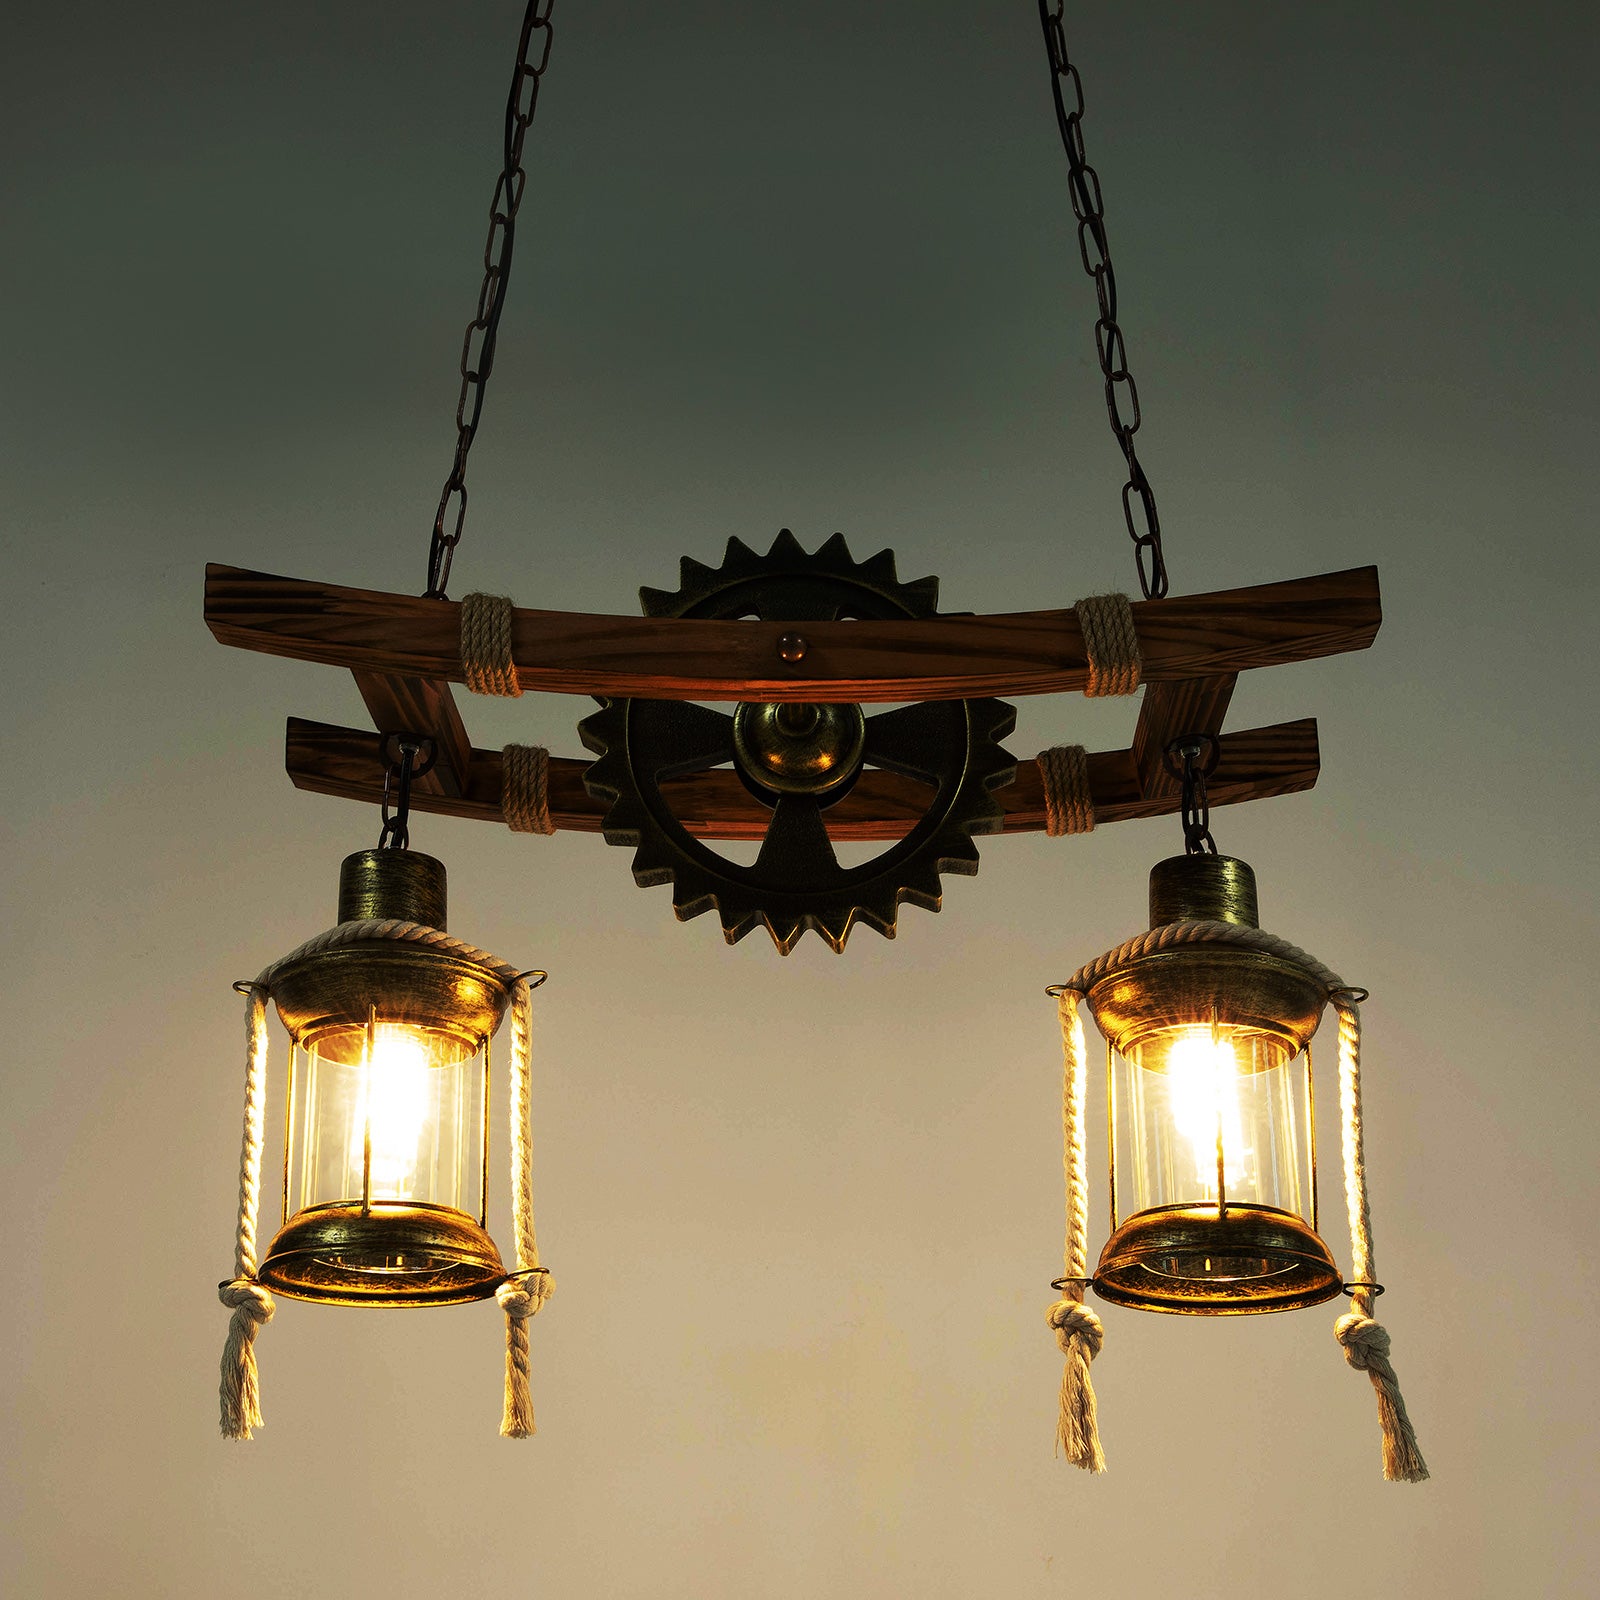 Lampadario retrò in legno, 2 teste metallo lampadario, lampada a sospensione regolabile